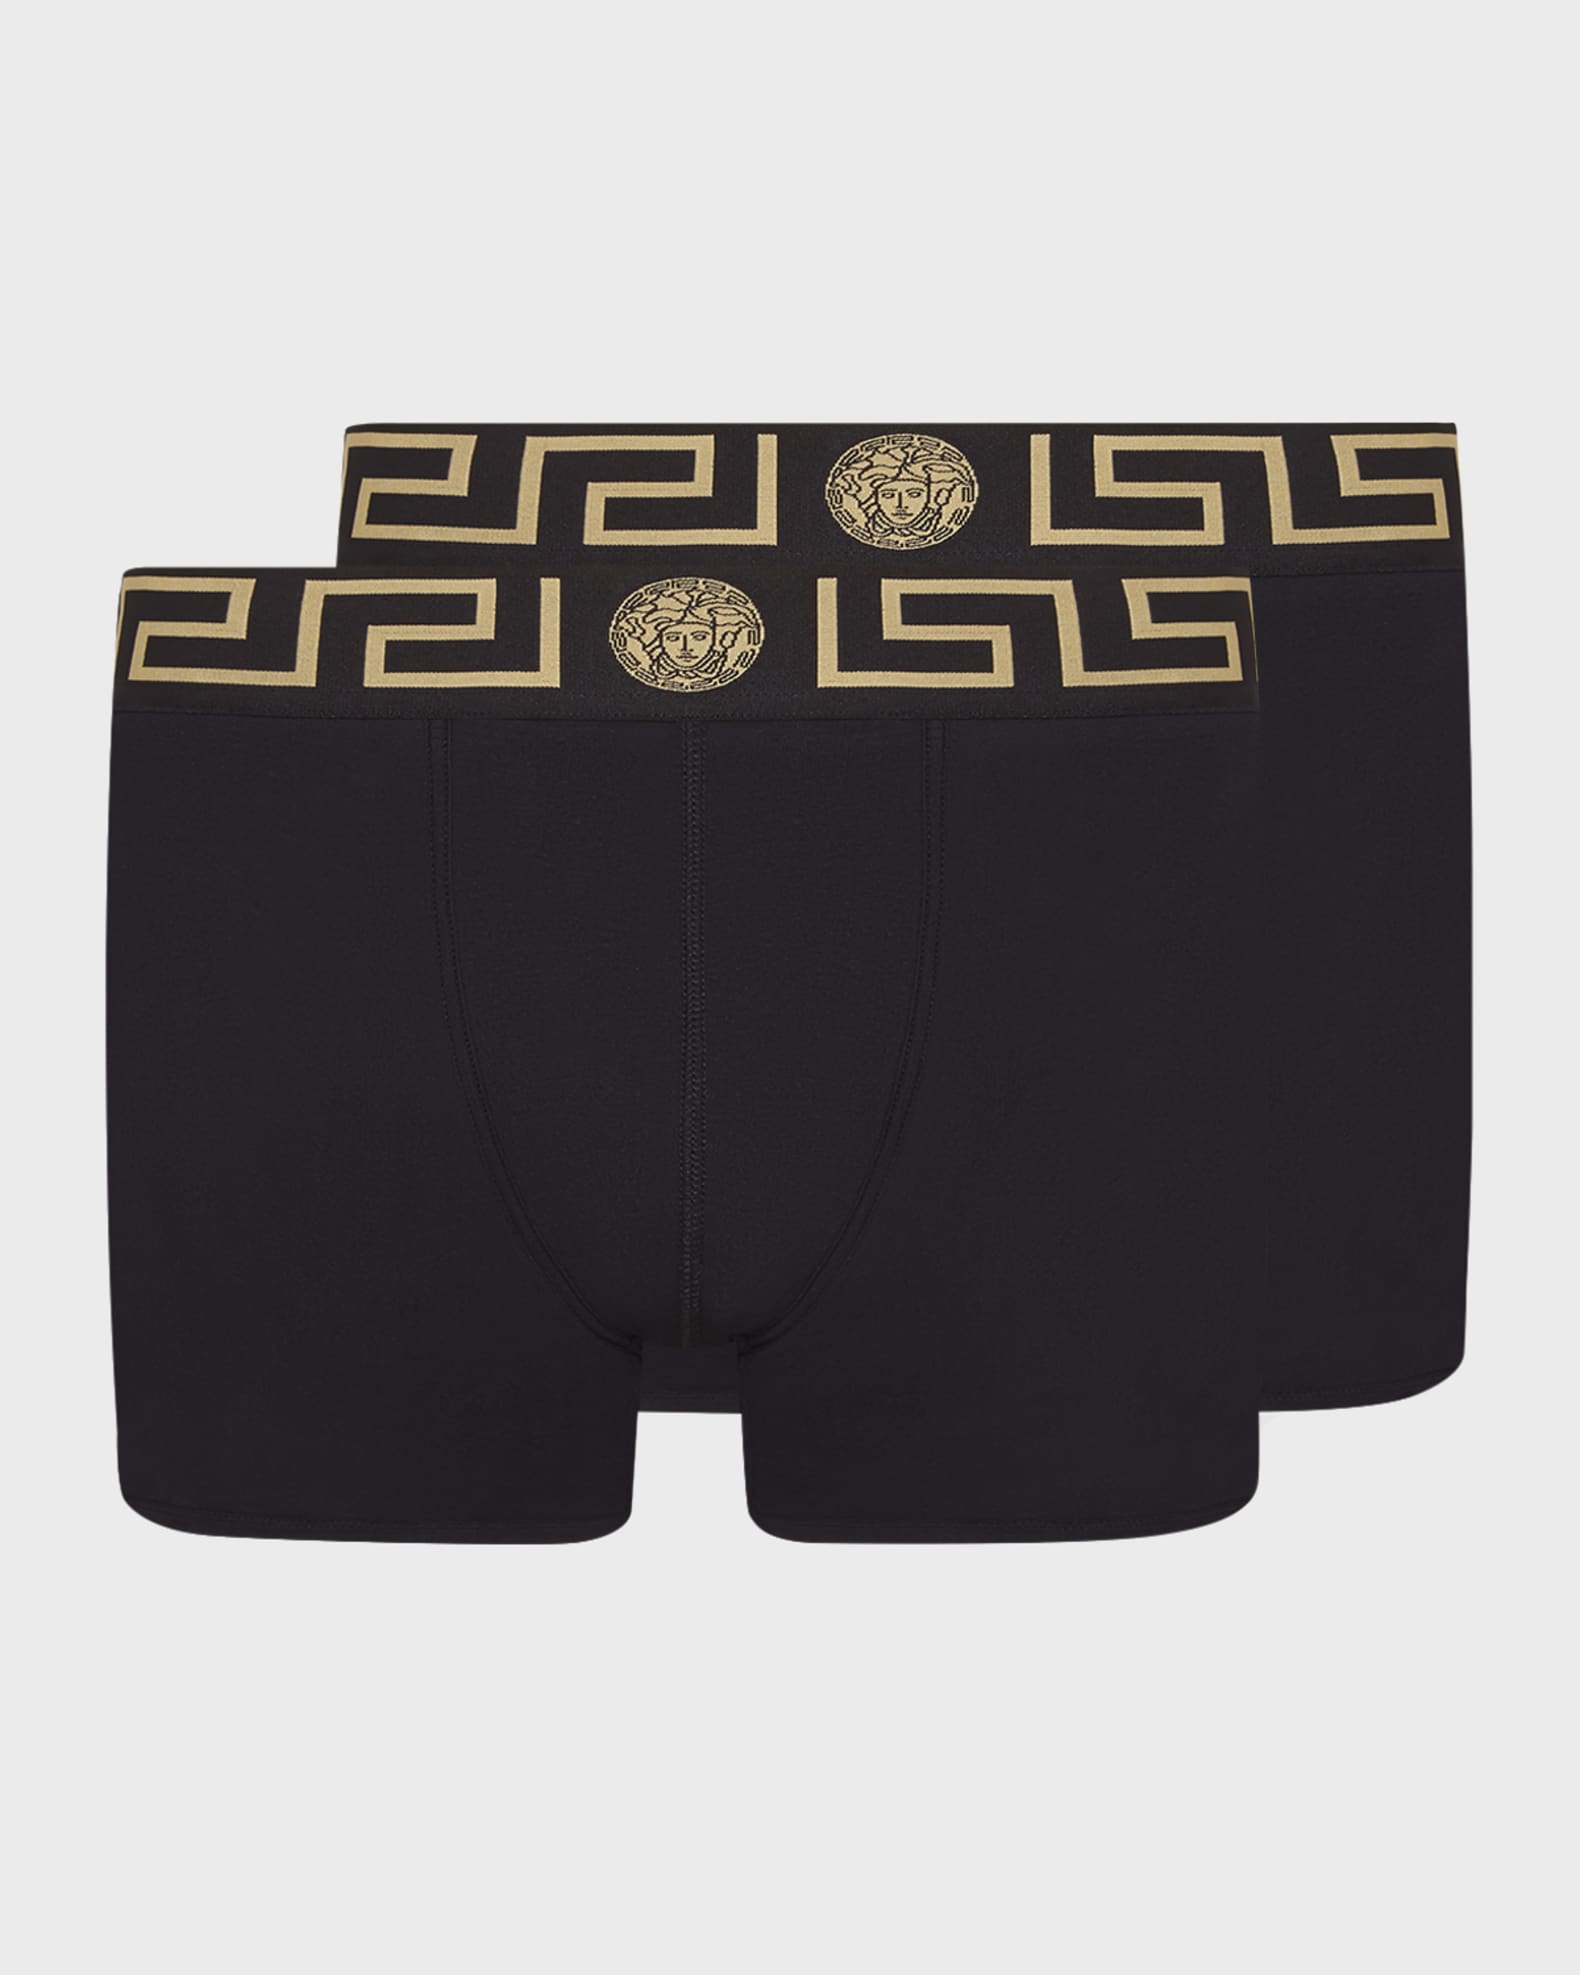 Versace Underwear: Two-Pack Black Greca Border Boxers